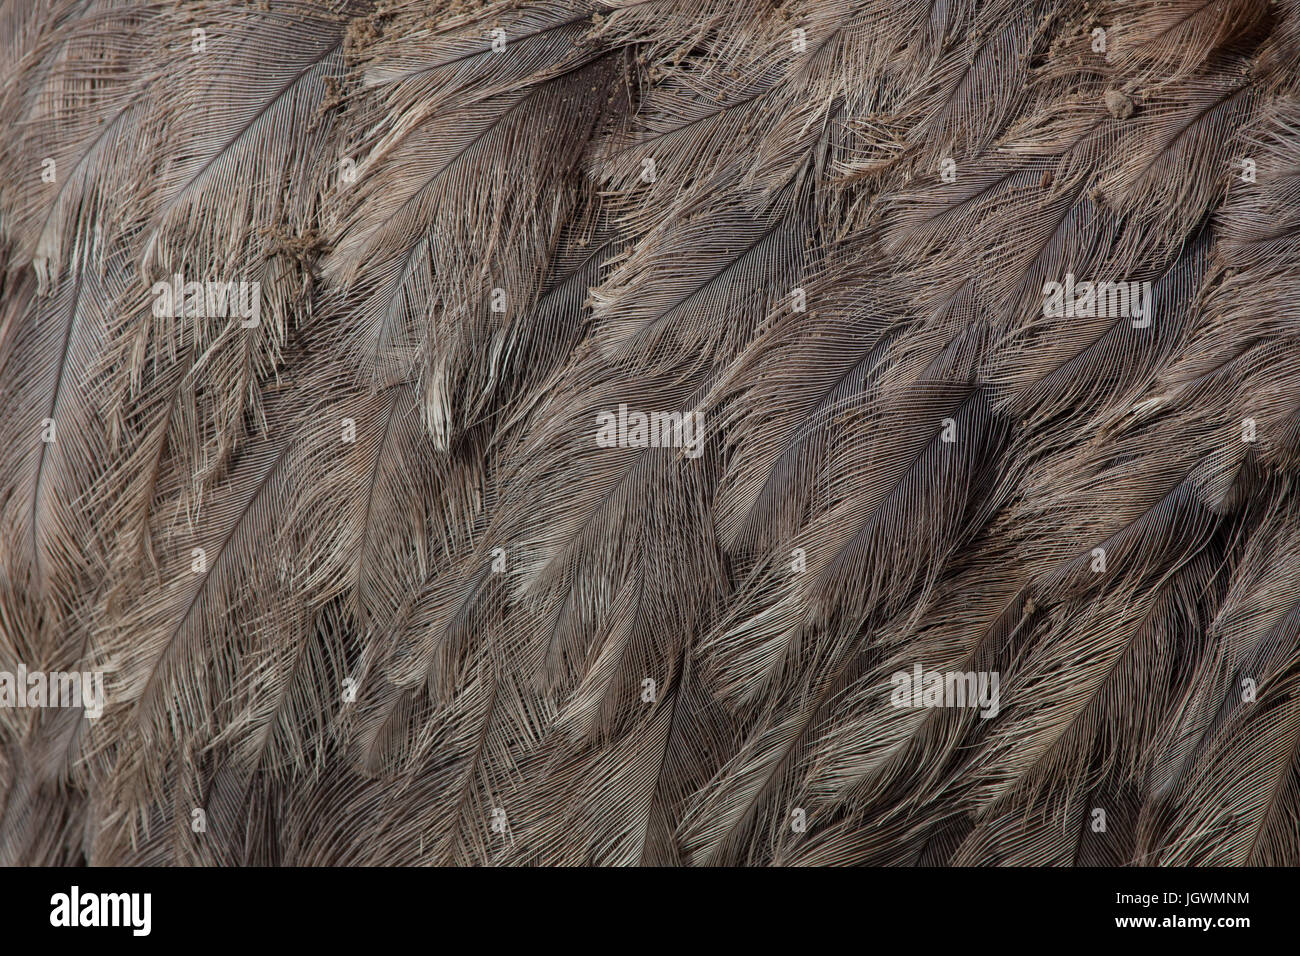 Greater rhea (Rhea americana), also known as the common rhea. Plumage texture. Stock Photo